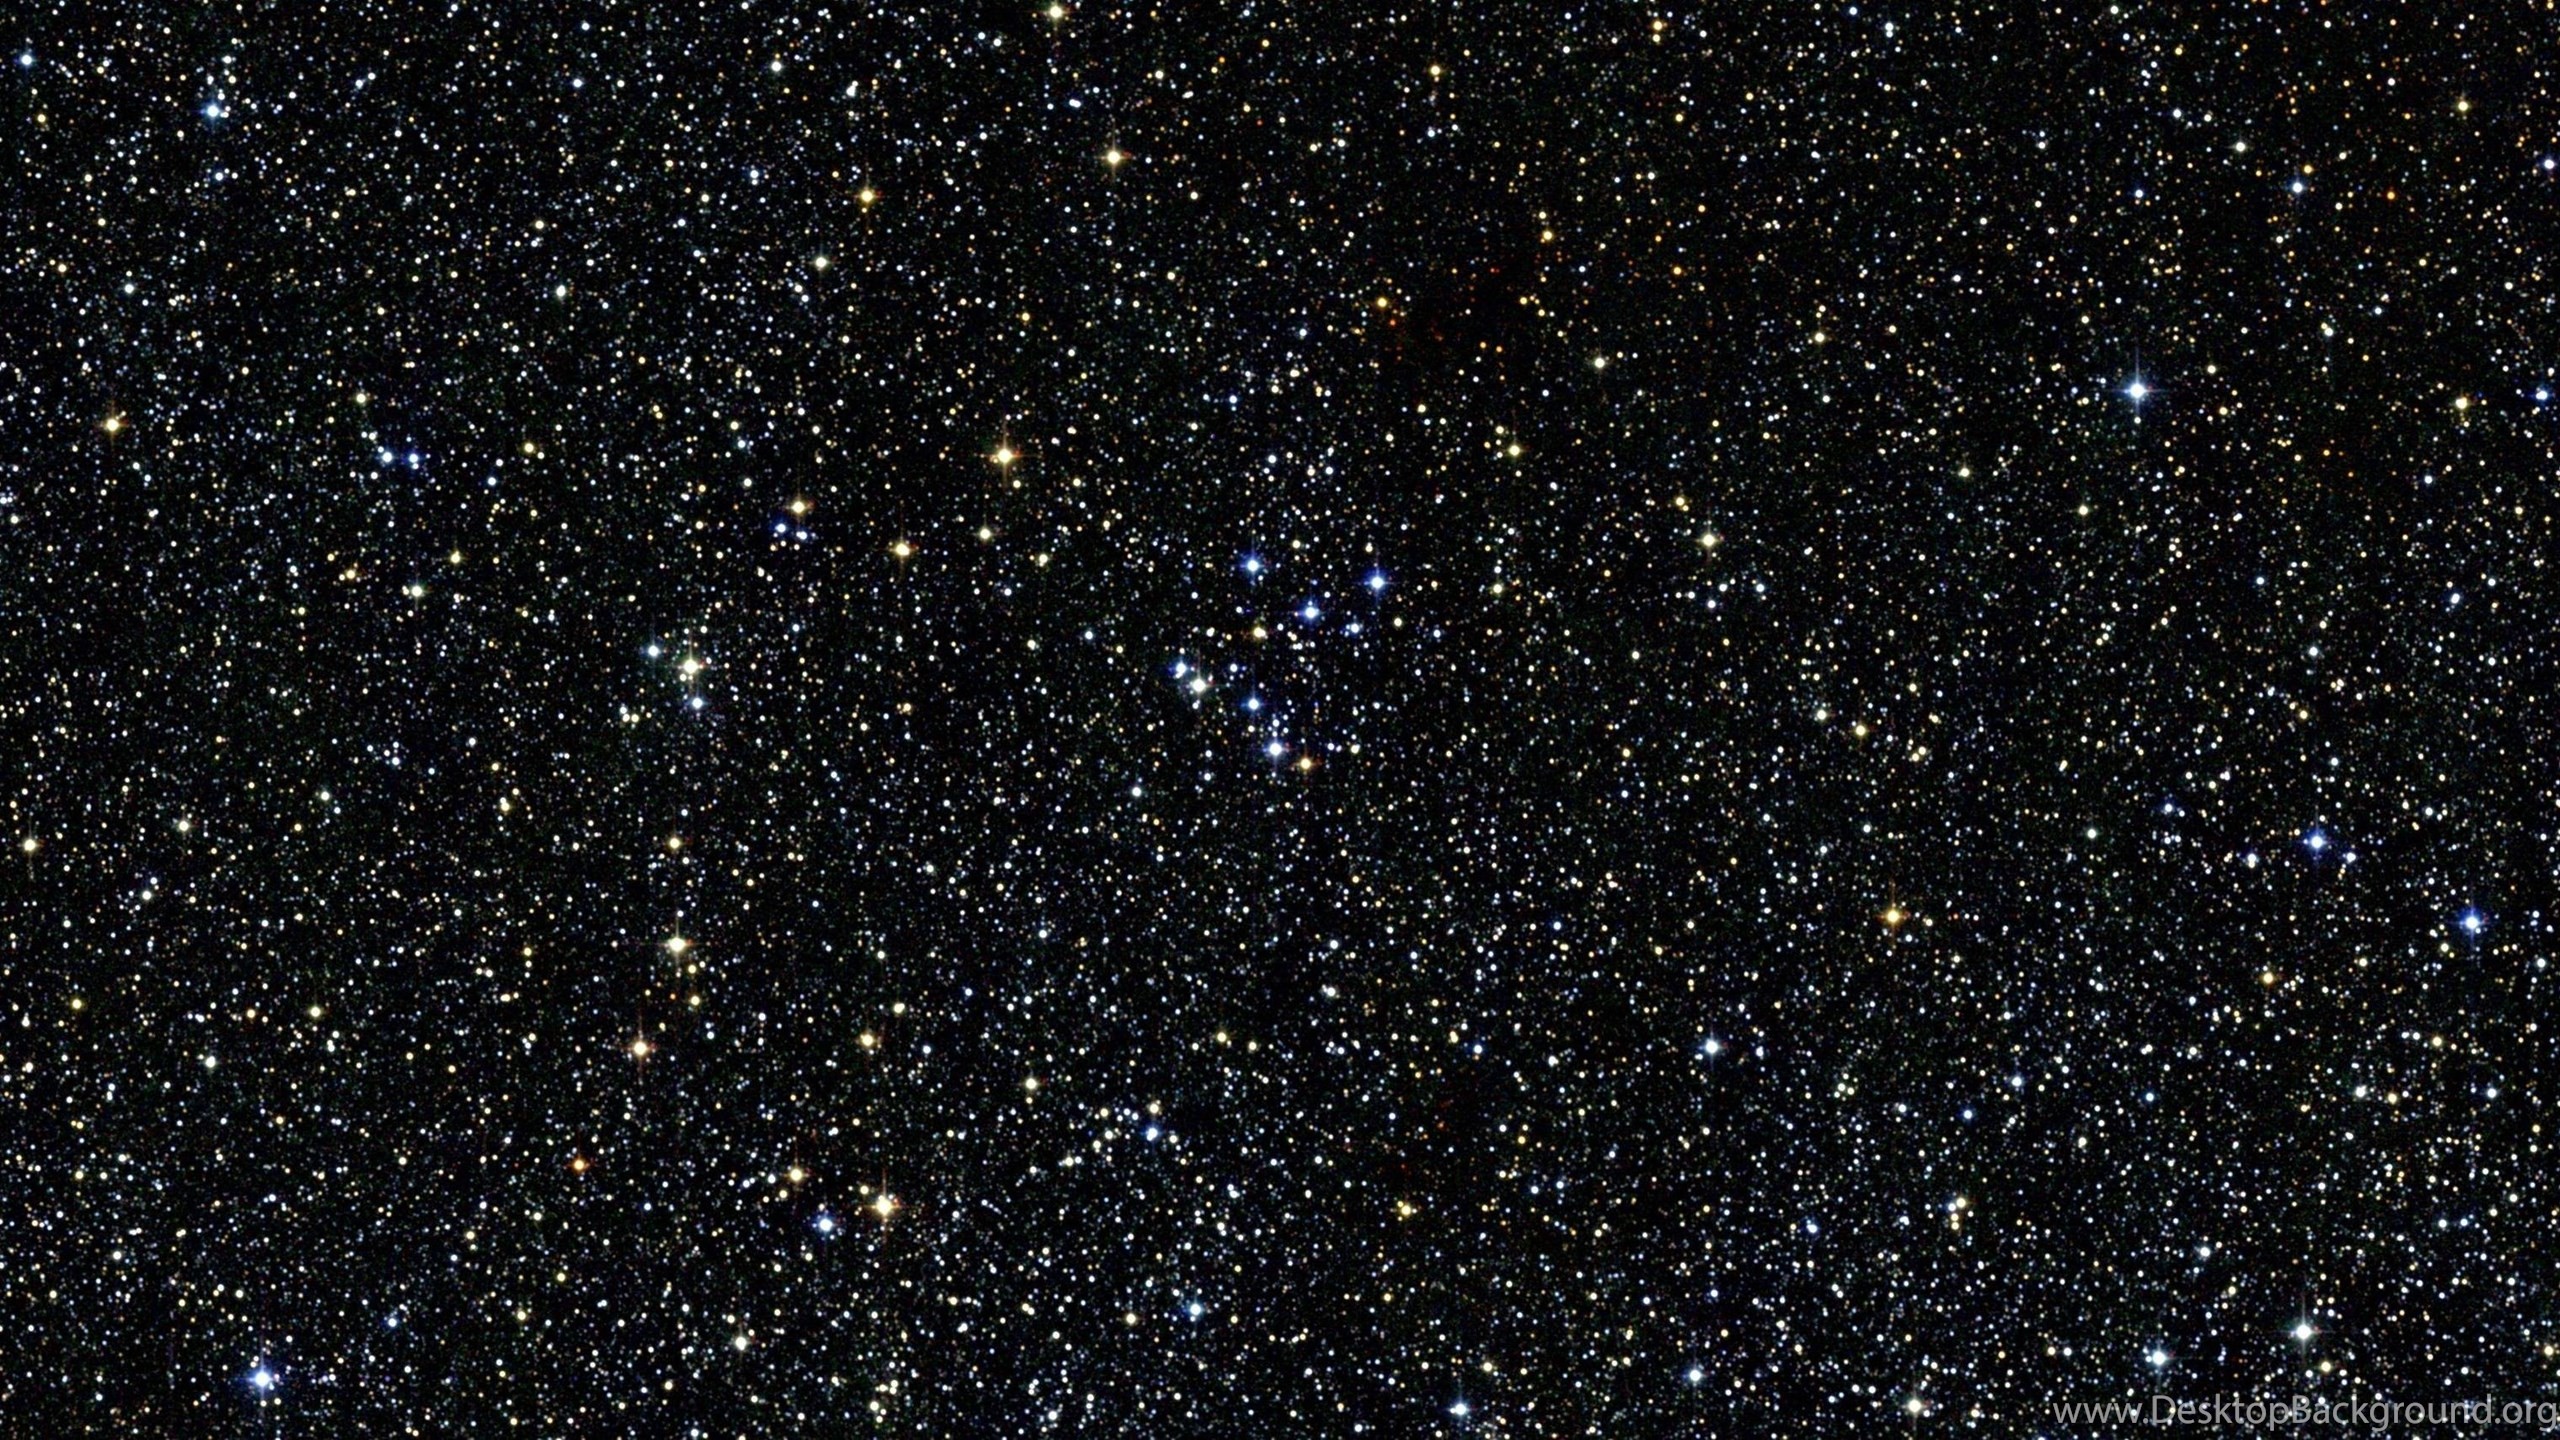 2560x1440 star backgrounds resume space desktop background